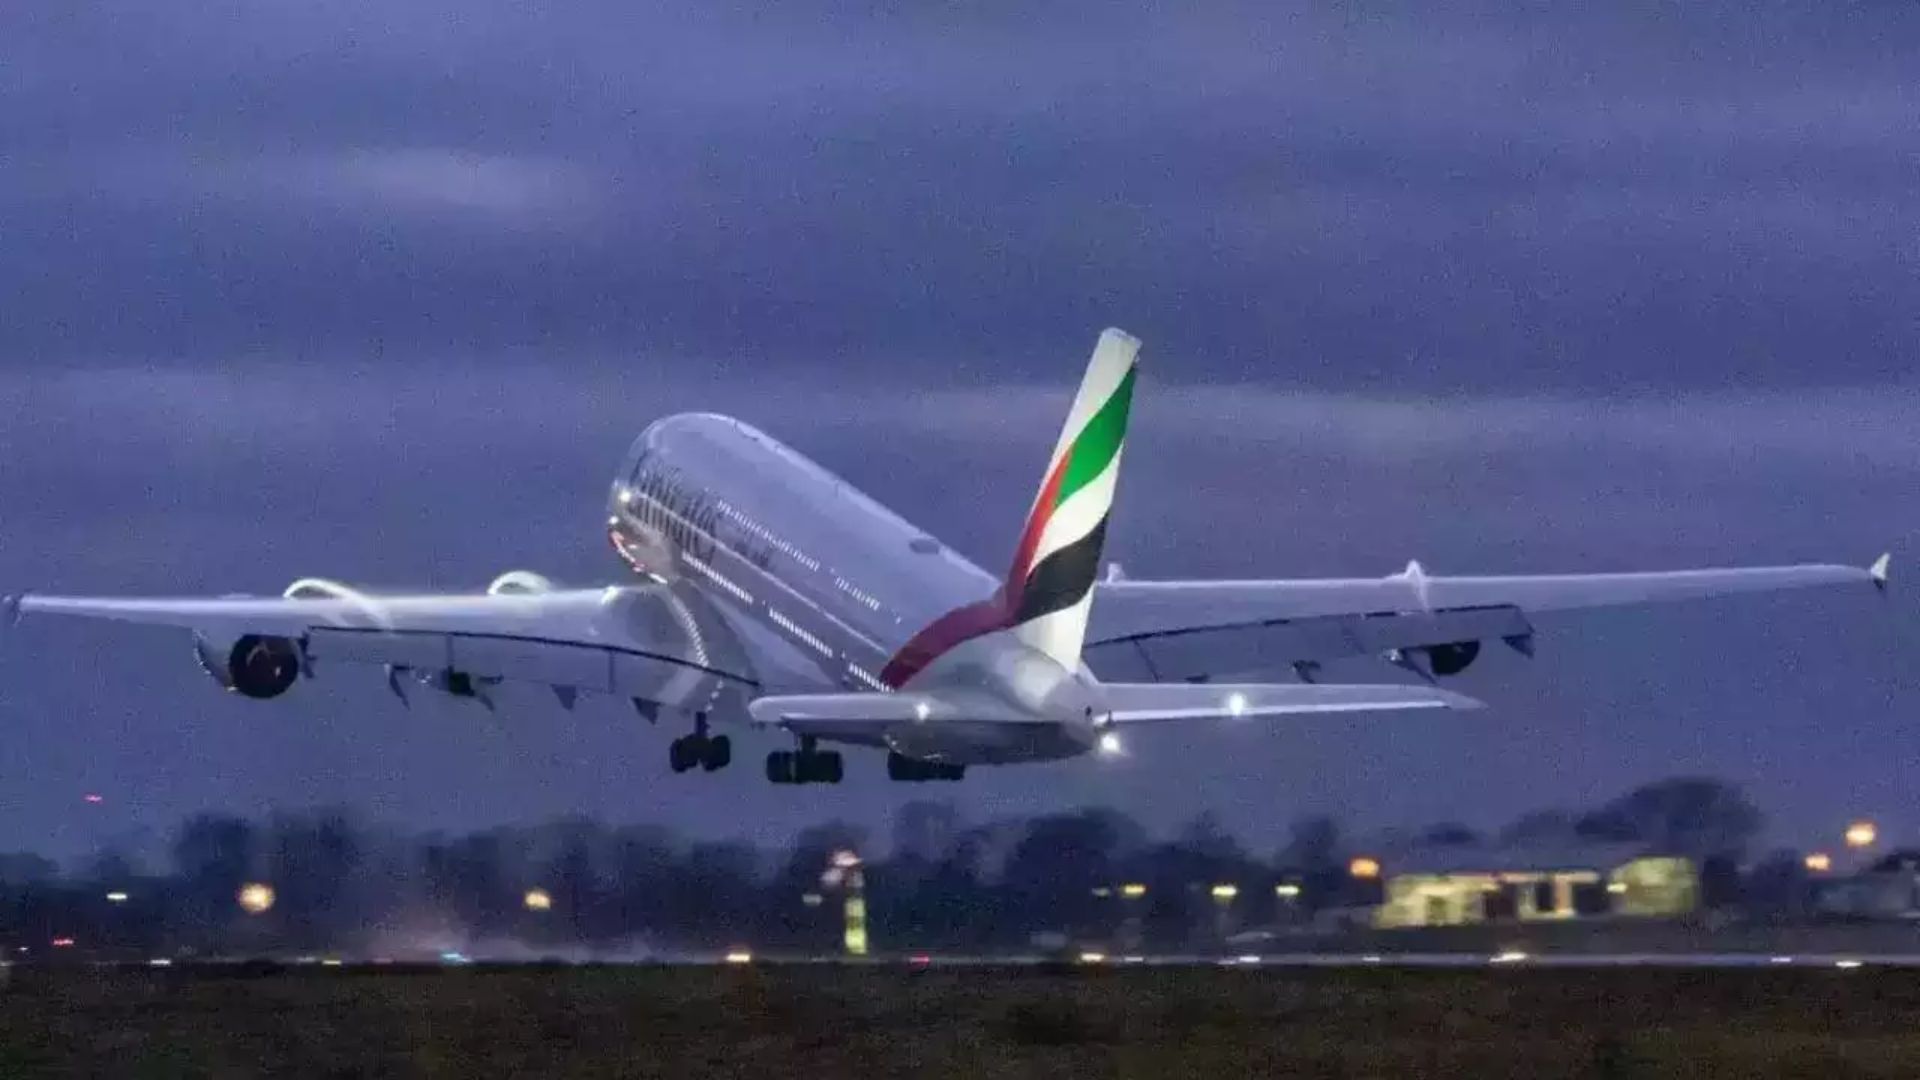 Emirates landed same place